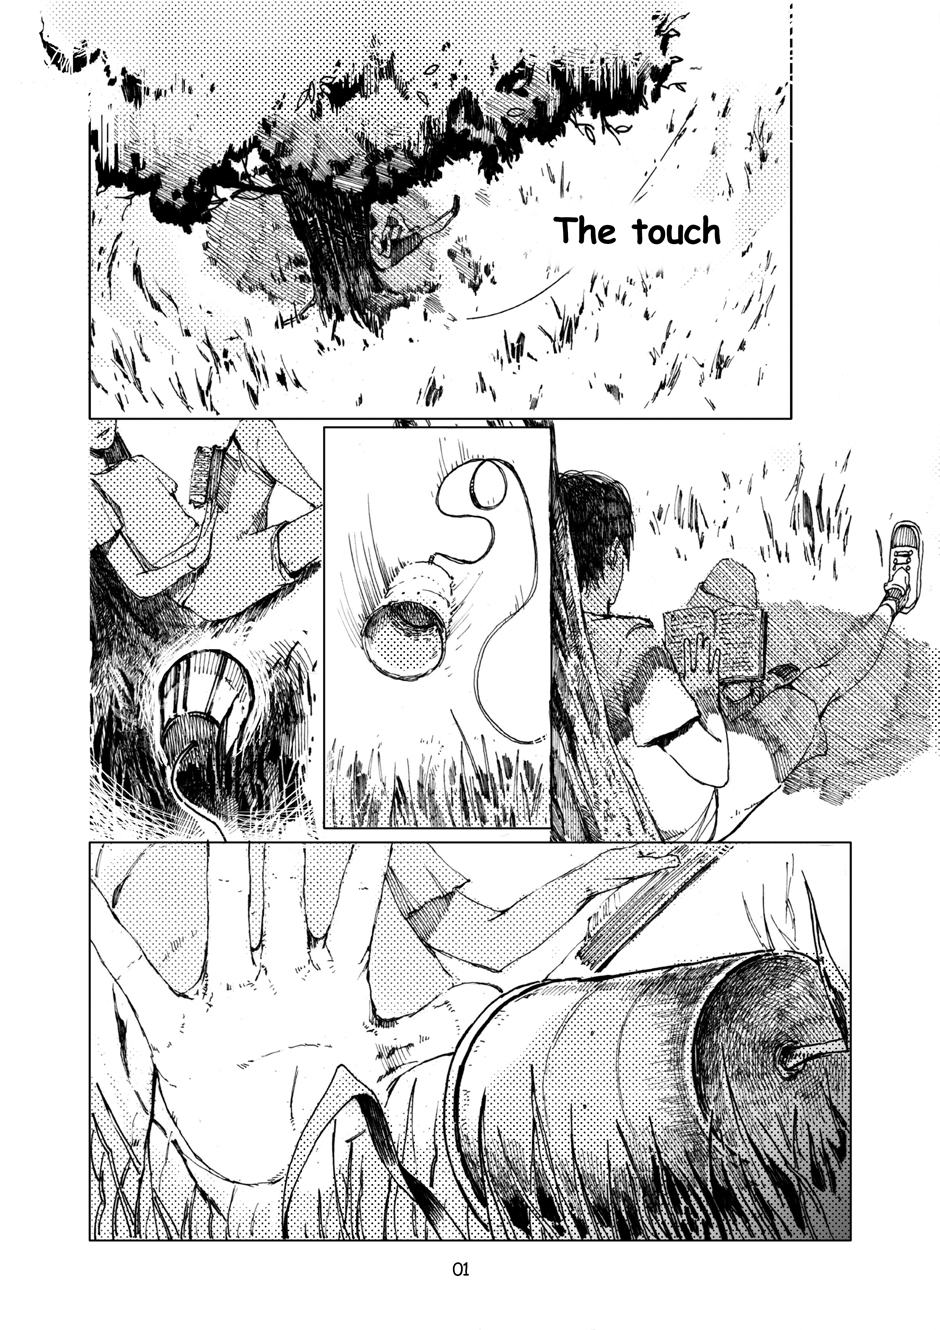 Комикс The touch: выпуск №1